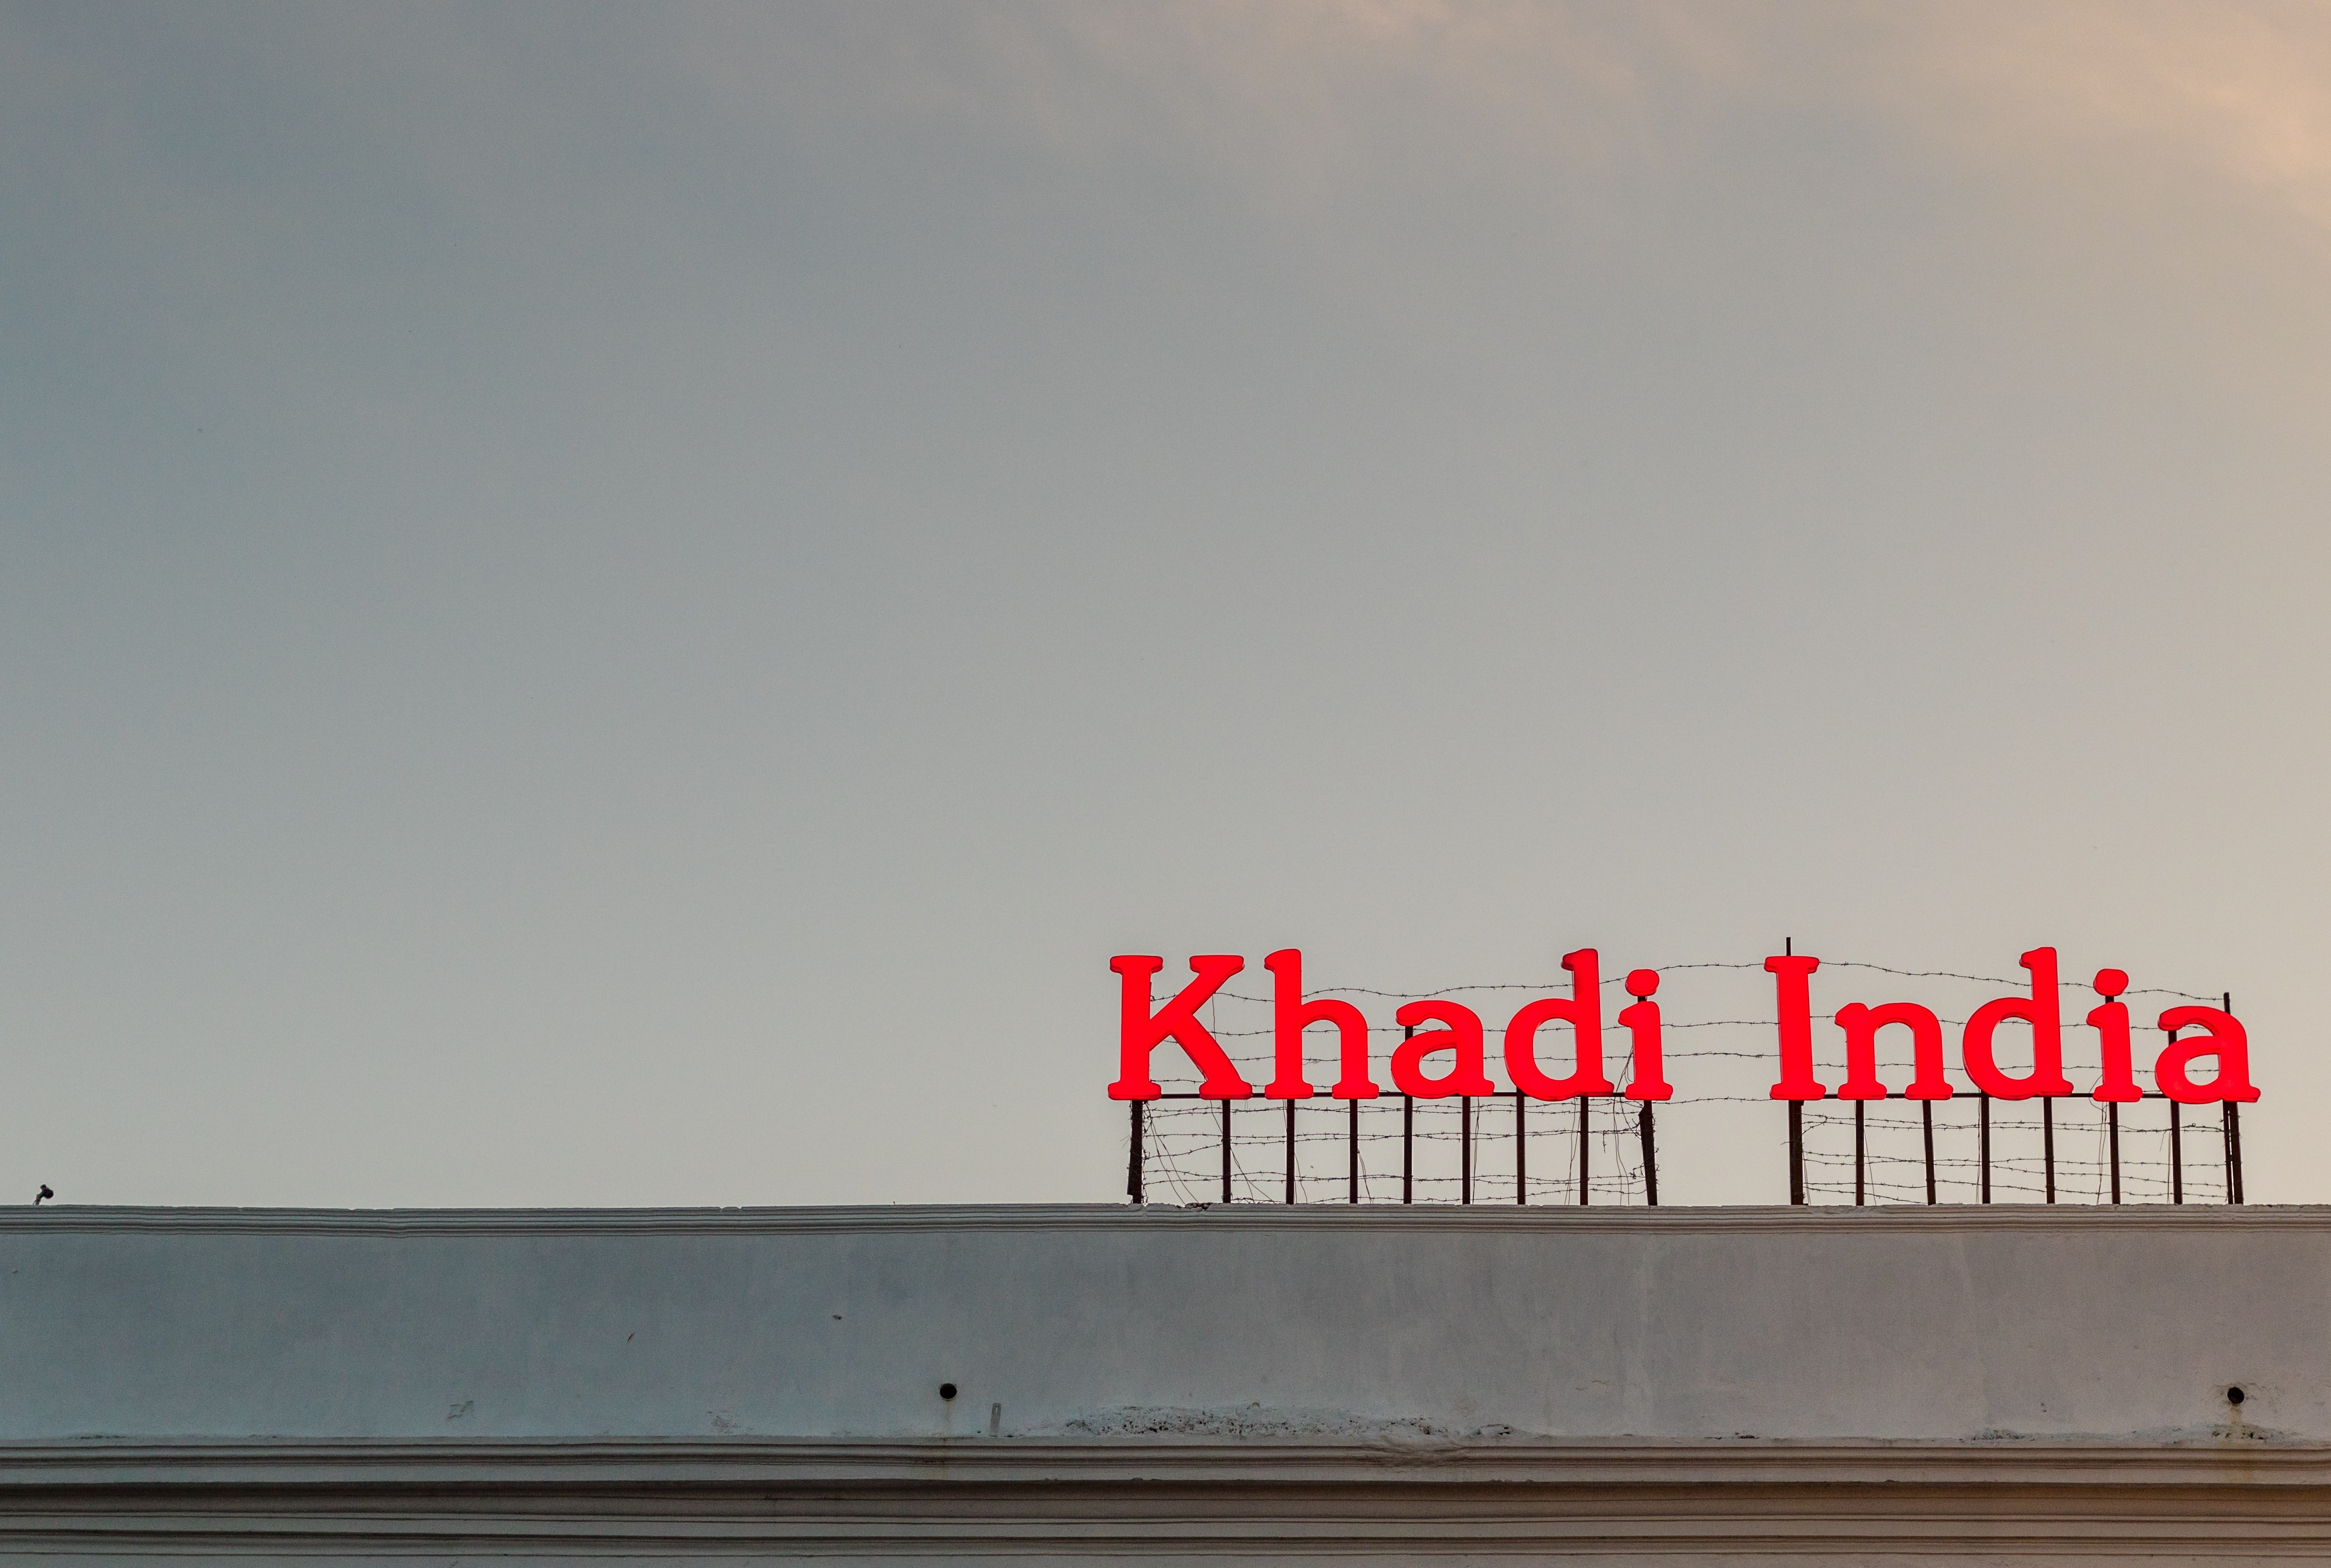 Khali India board